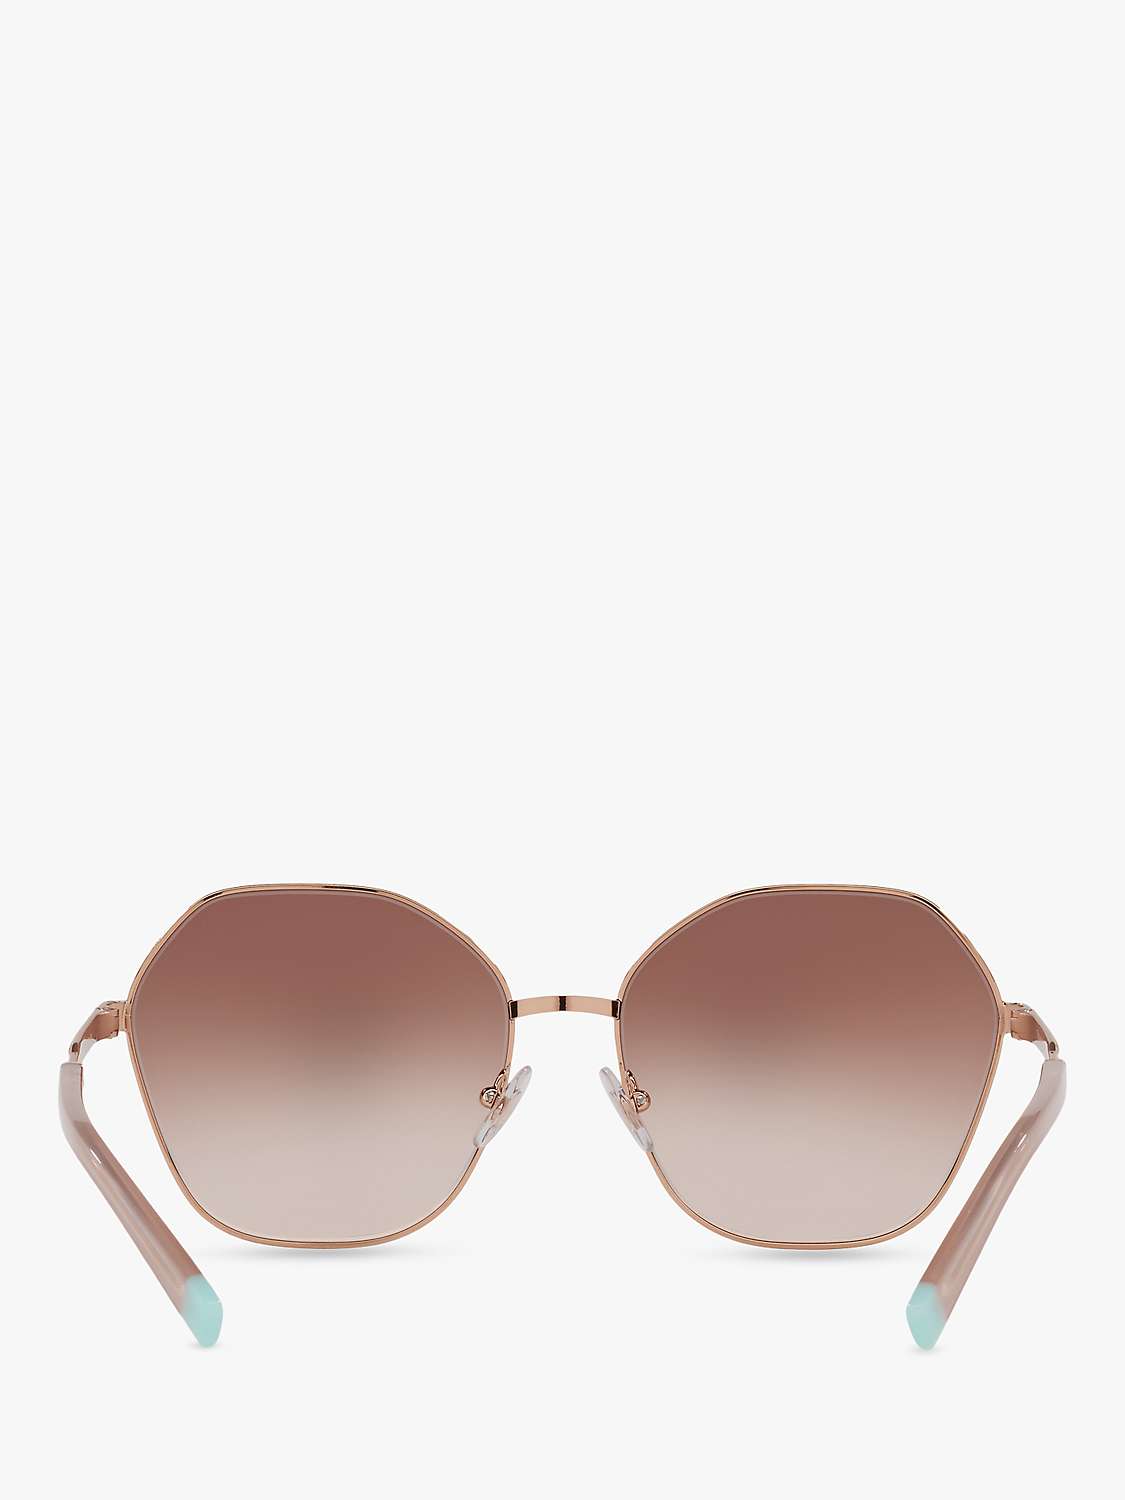 Buy Tiffany & Co TF3081 Women's Irregular Sunglasses Online at johnlewis.com